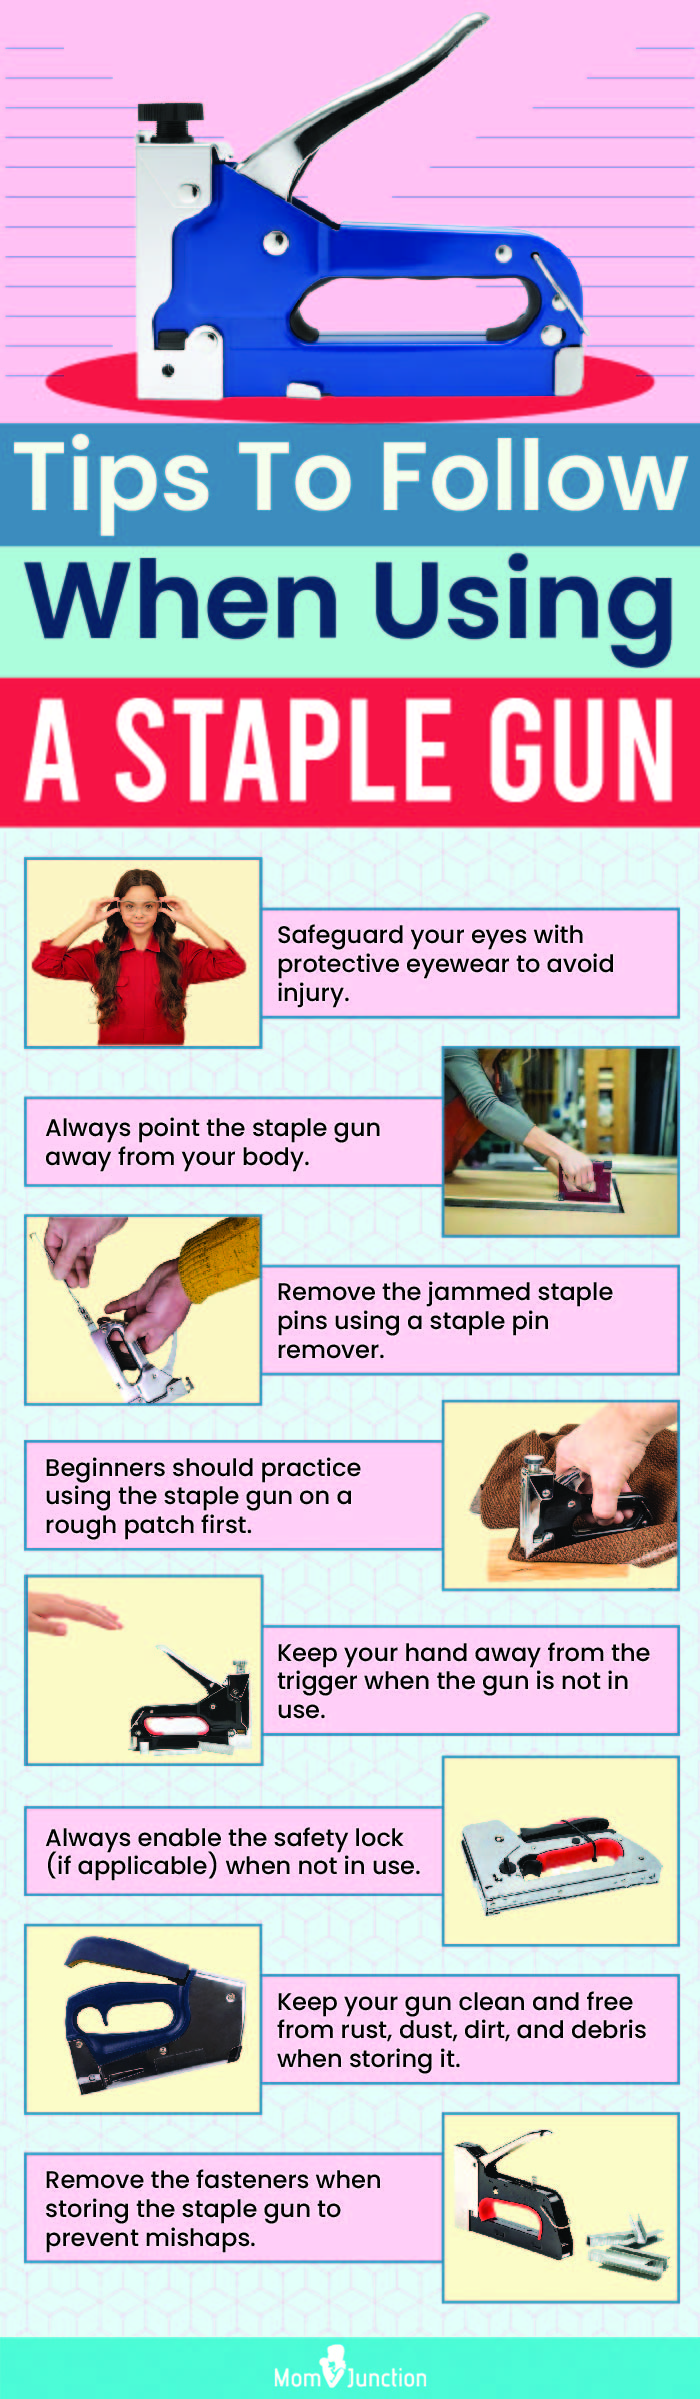 Tips To Follow When Using A Staple Gun (infographic)